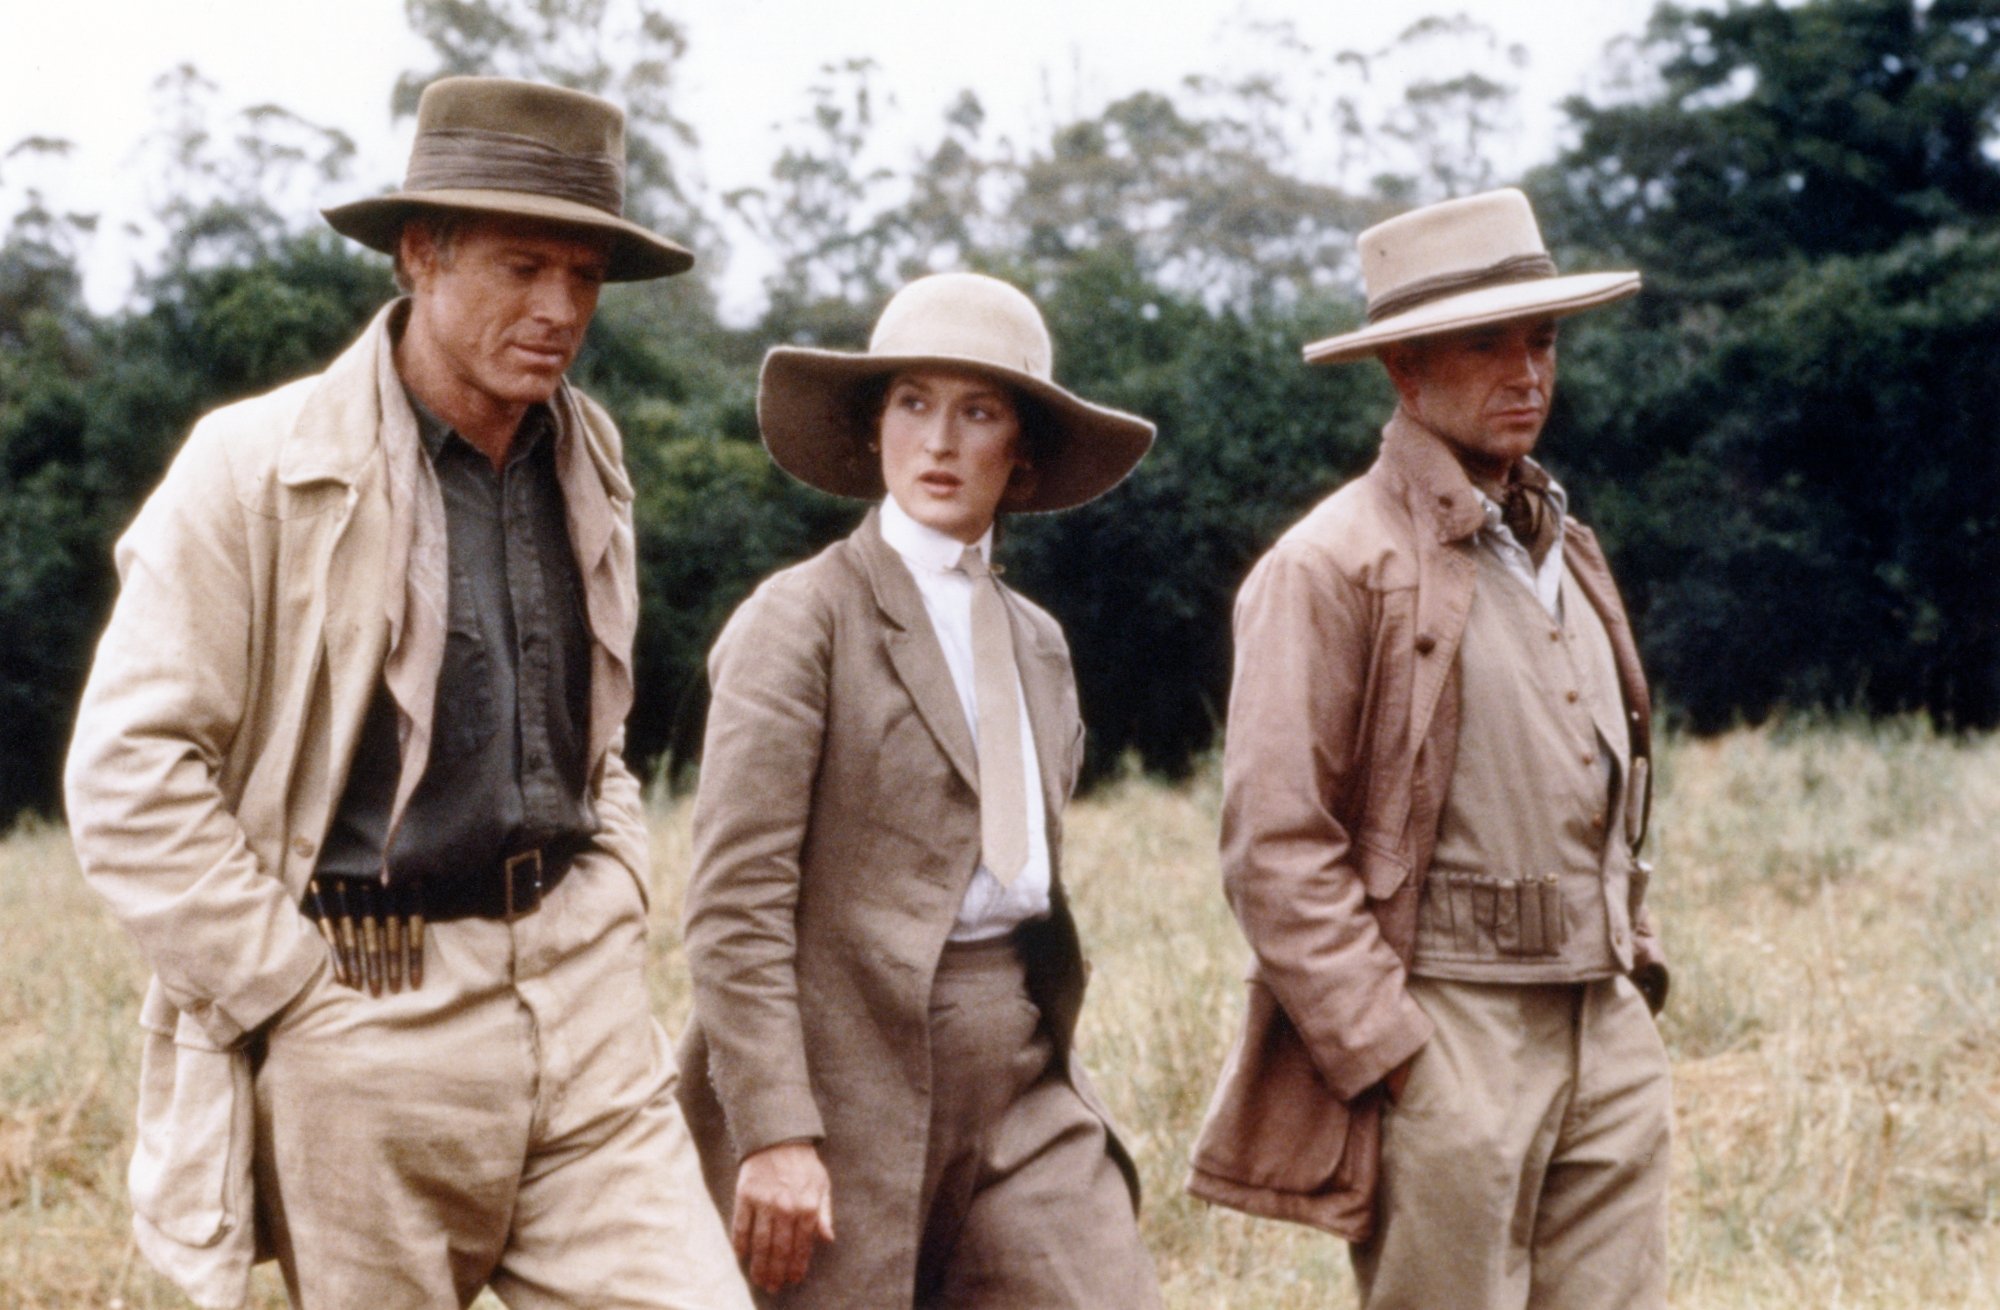 'Out of Africa' Robert Redford as Denys, Meryl Streep as Karen Blixen, and Michael Kitchen walking through a plain in Africa wearing safari clothes